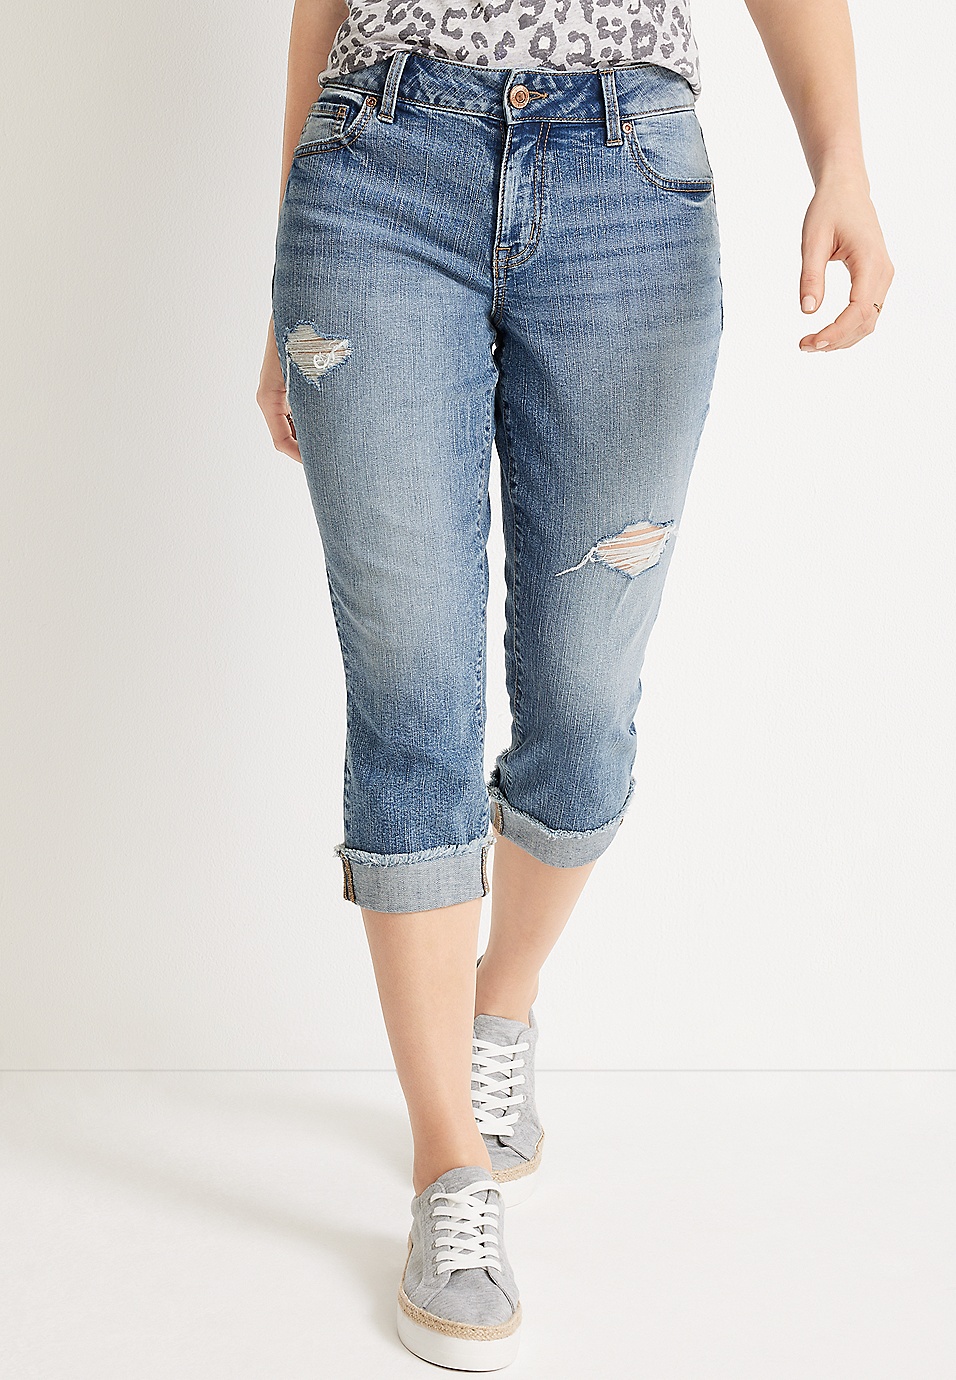 Women Jeans 36 Size Capris - Buy Women Jeans 36 Size Capris online